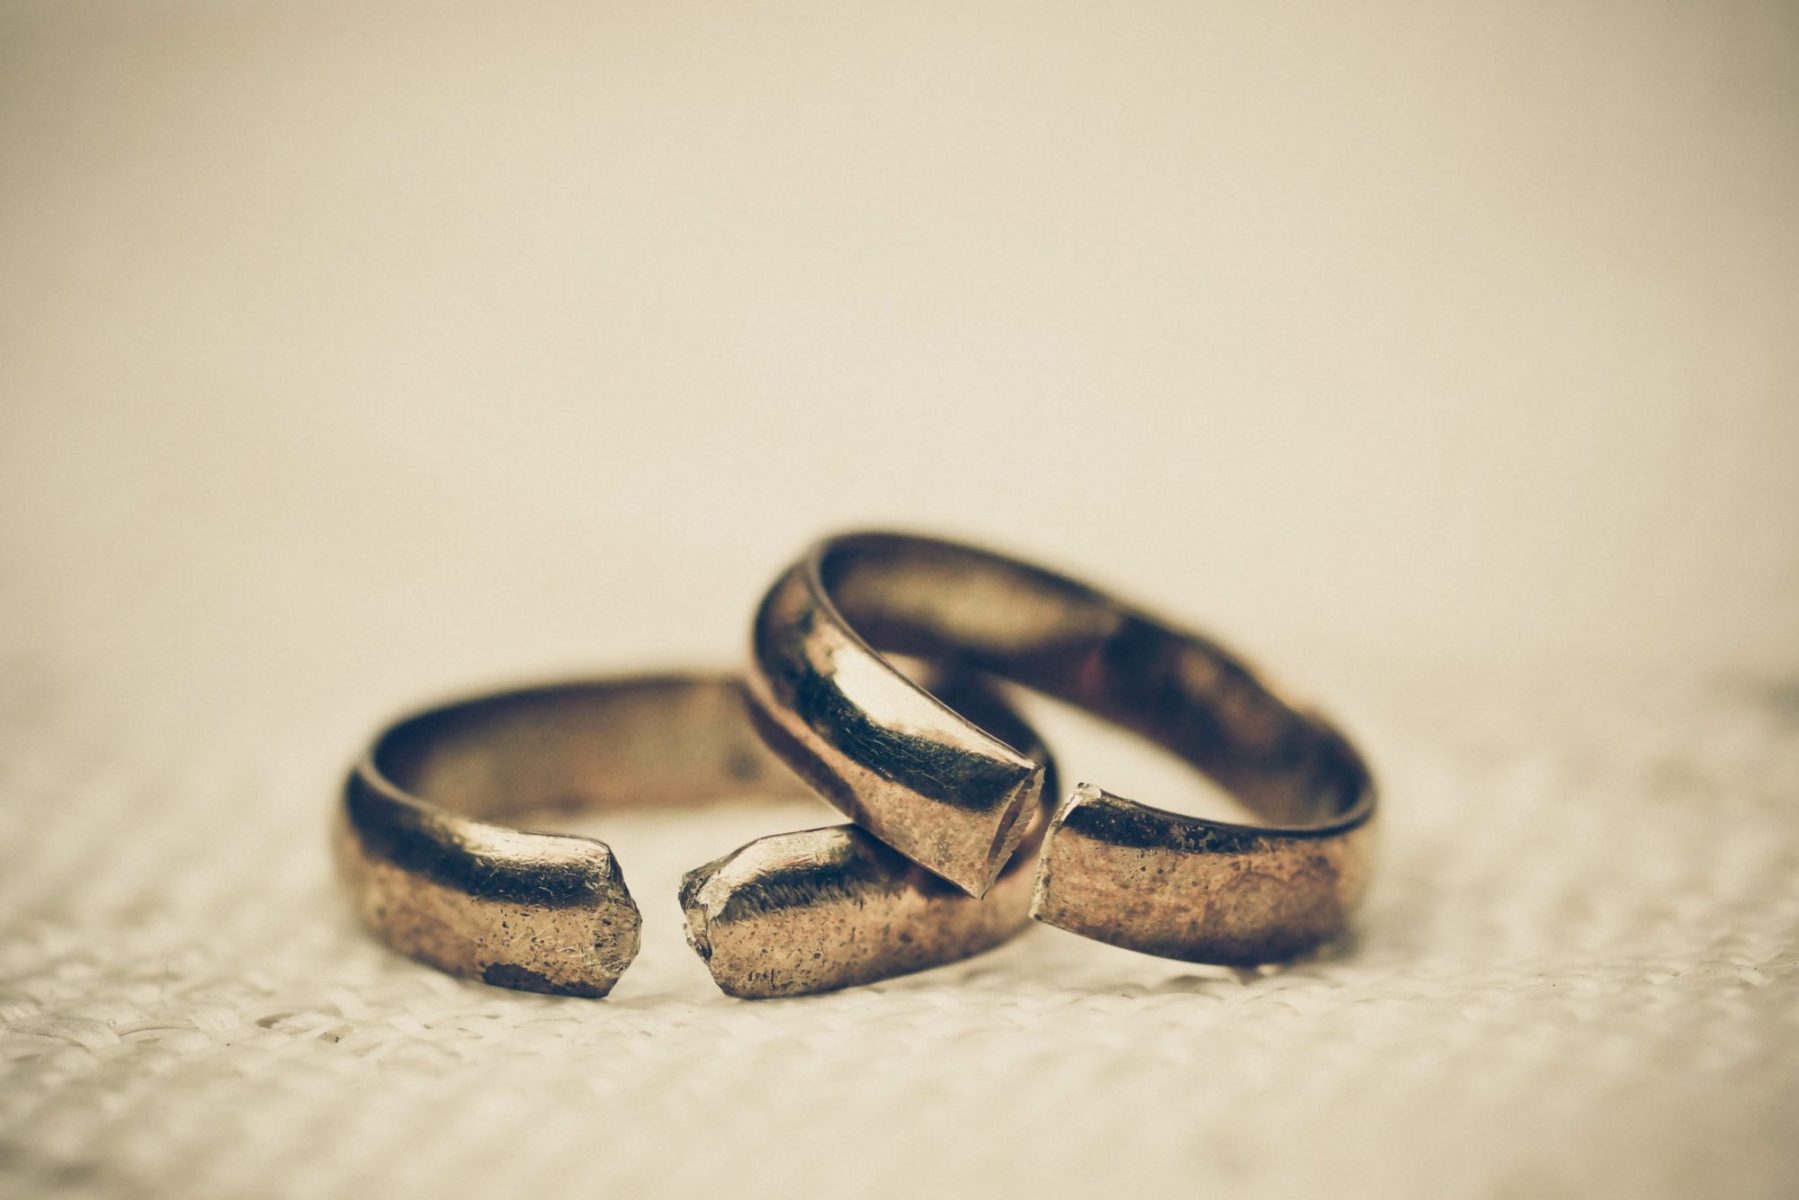 Two broken wedding rings, representing a divorce filing needed with Divorce Attorneys Darien.